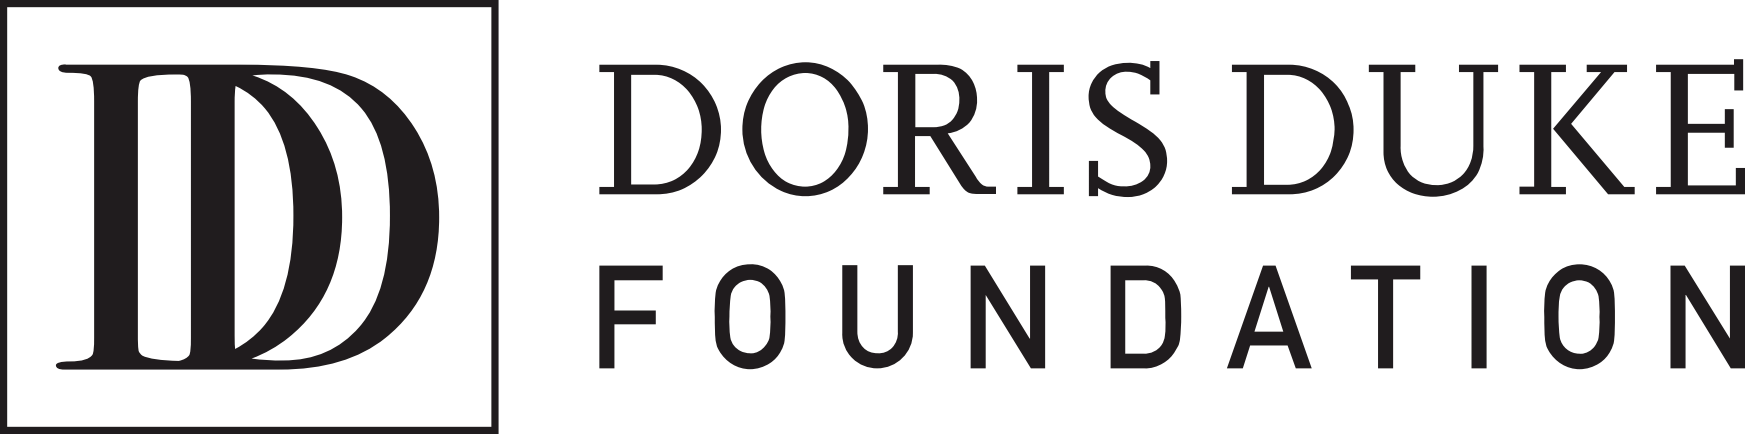 Doris Duke Foundation